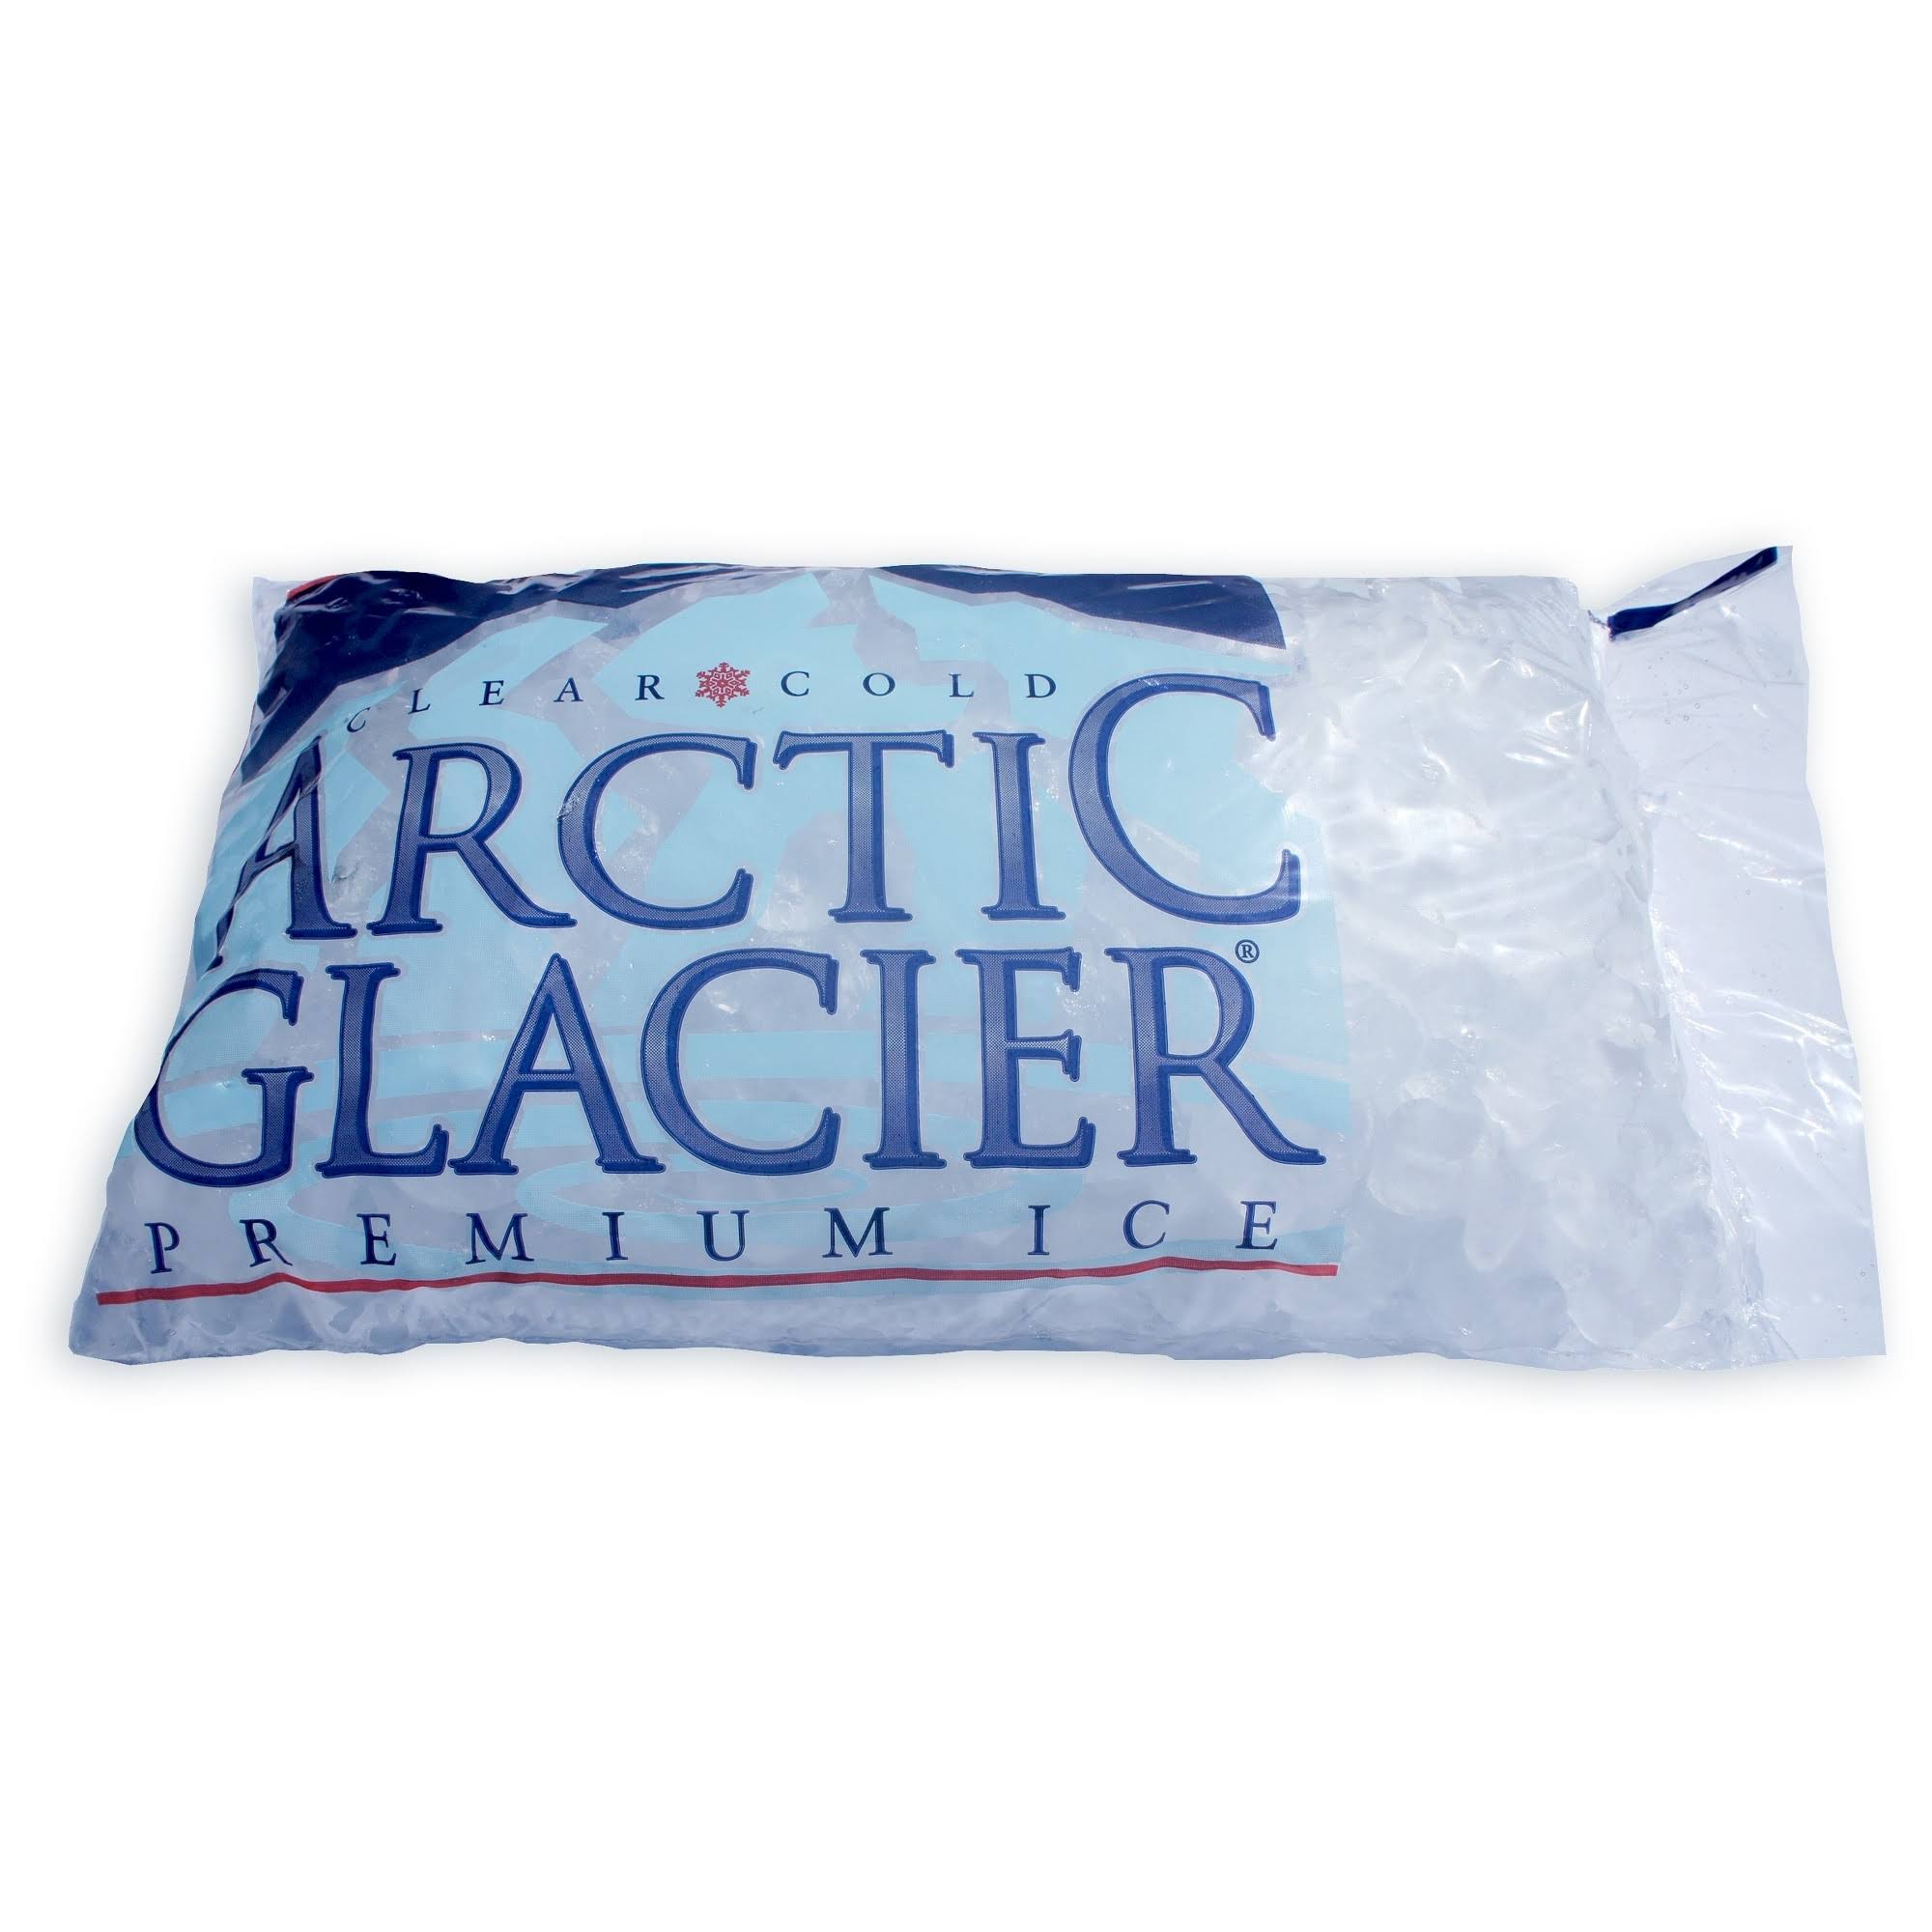 Arctic Glacier Premium Ice (16 lbs.)